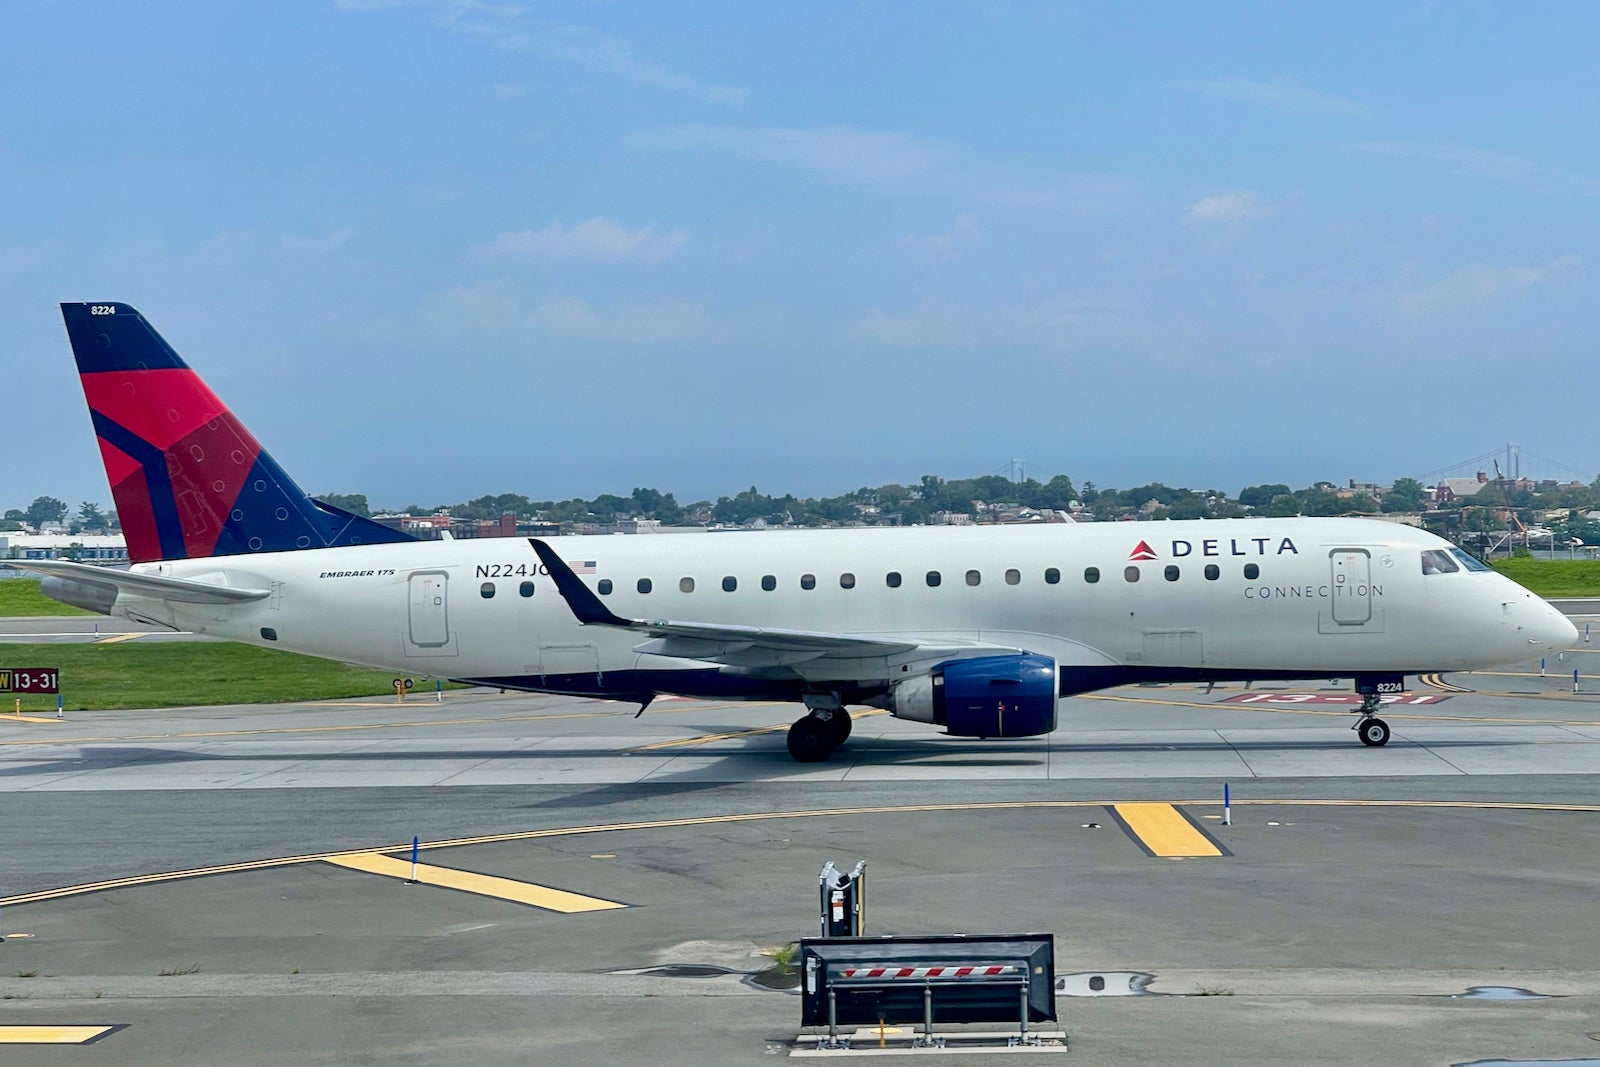 Delta Connection Embraer 175